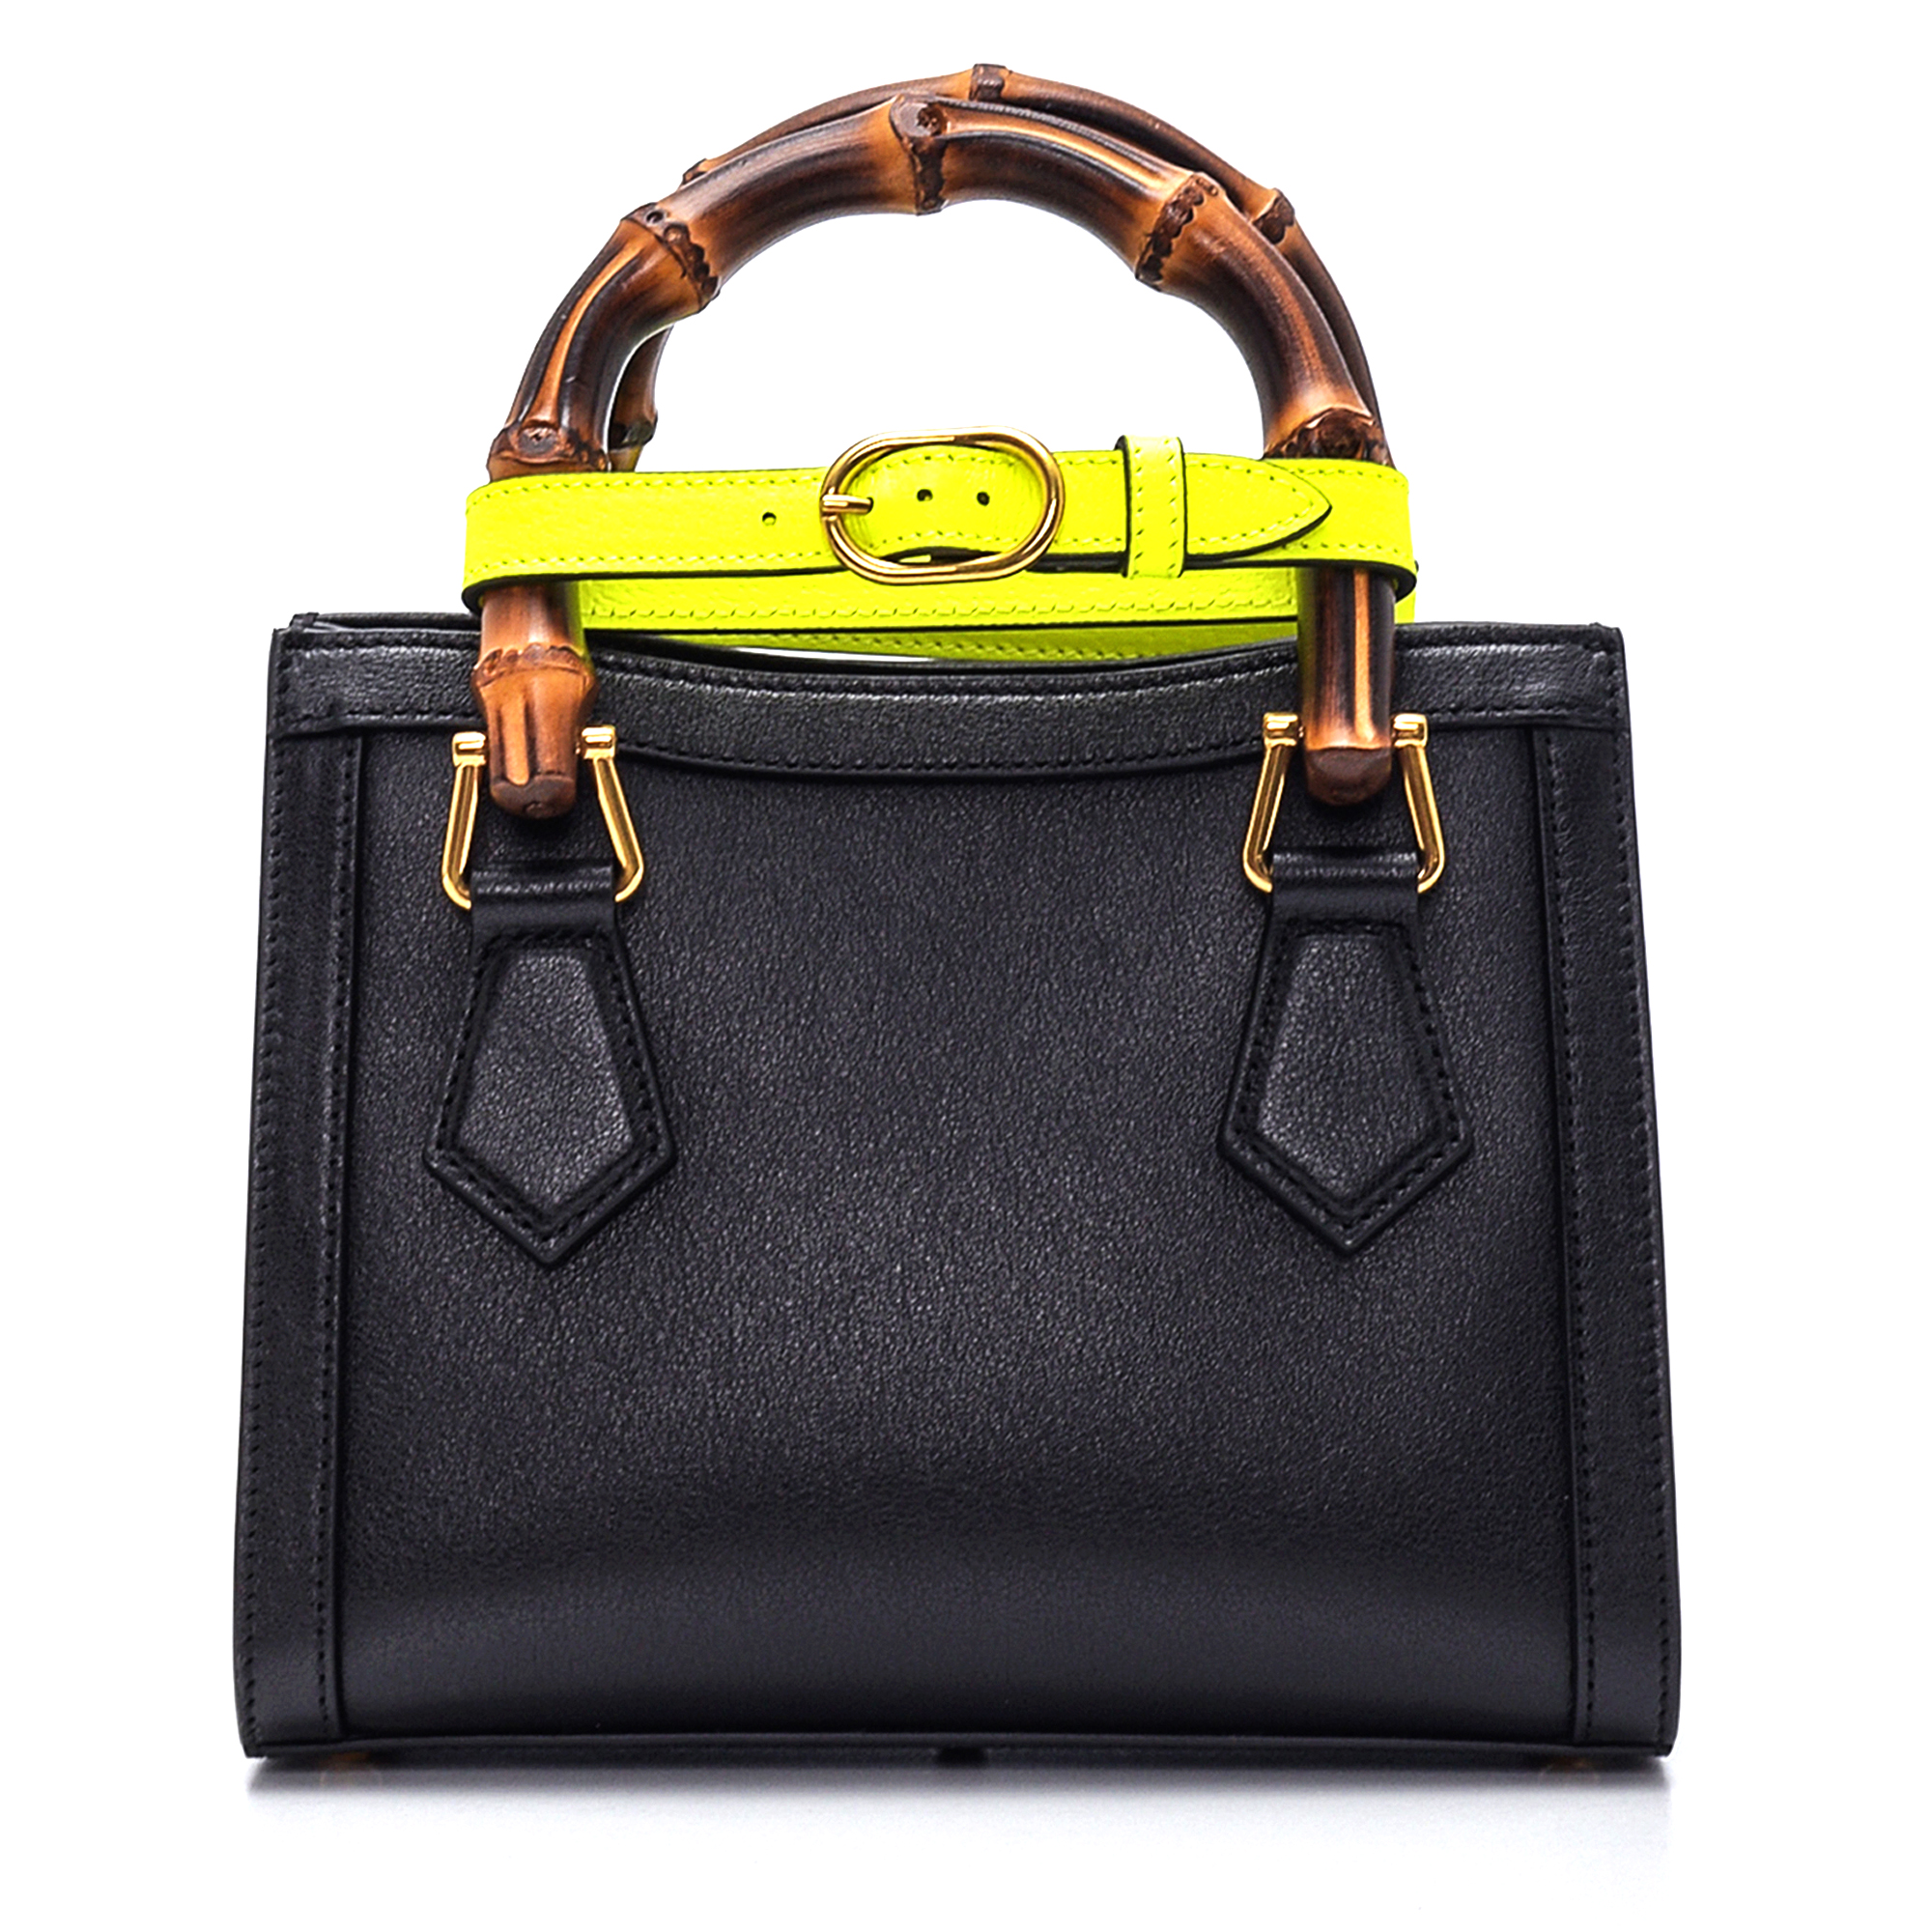 Gucci - Nero Black Leather Mini Diana Bamboo Bag